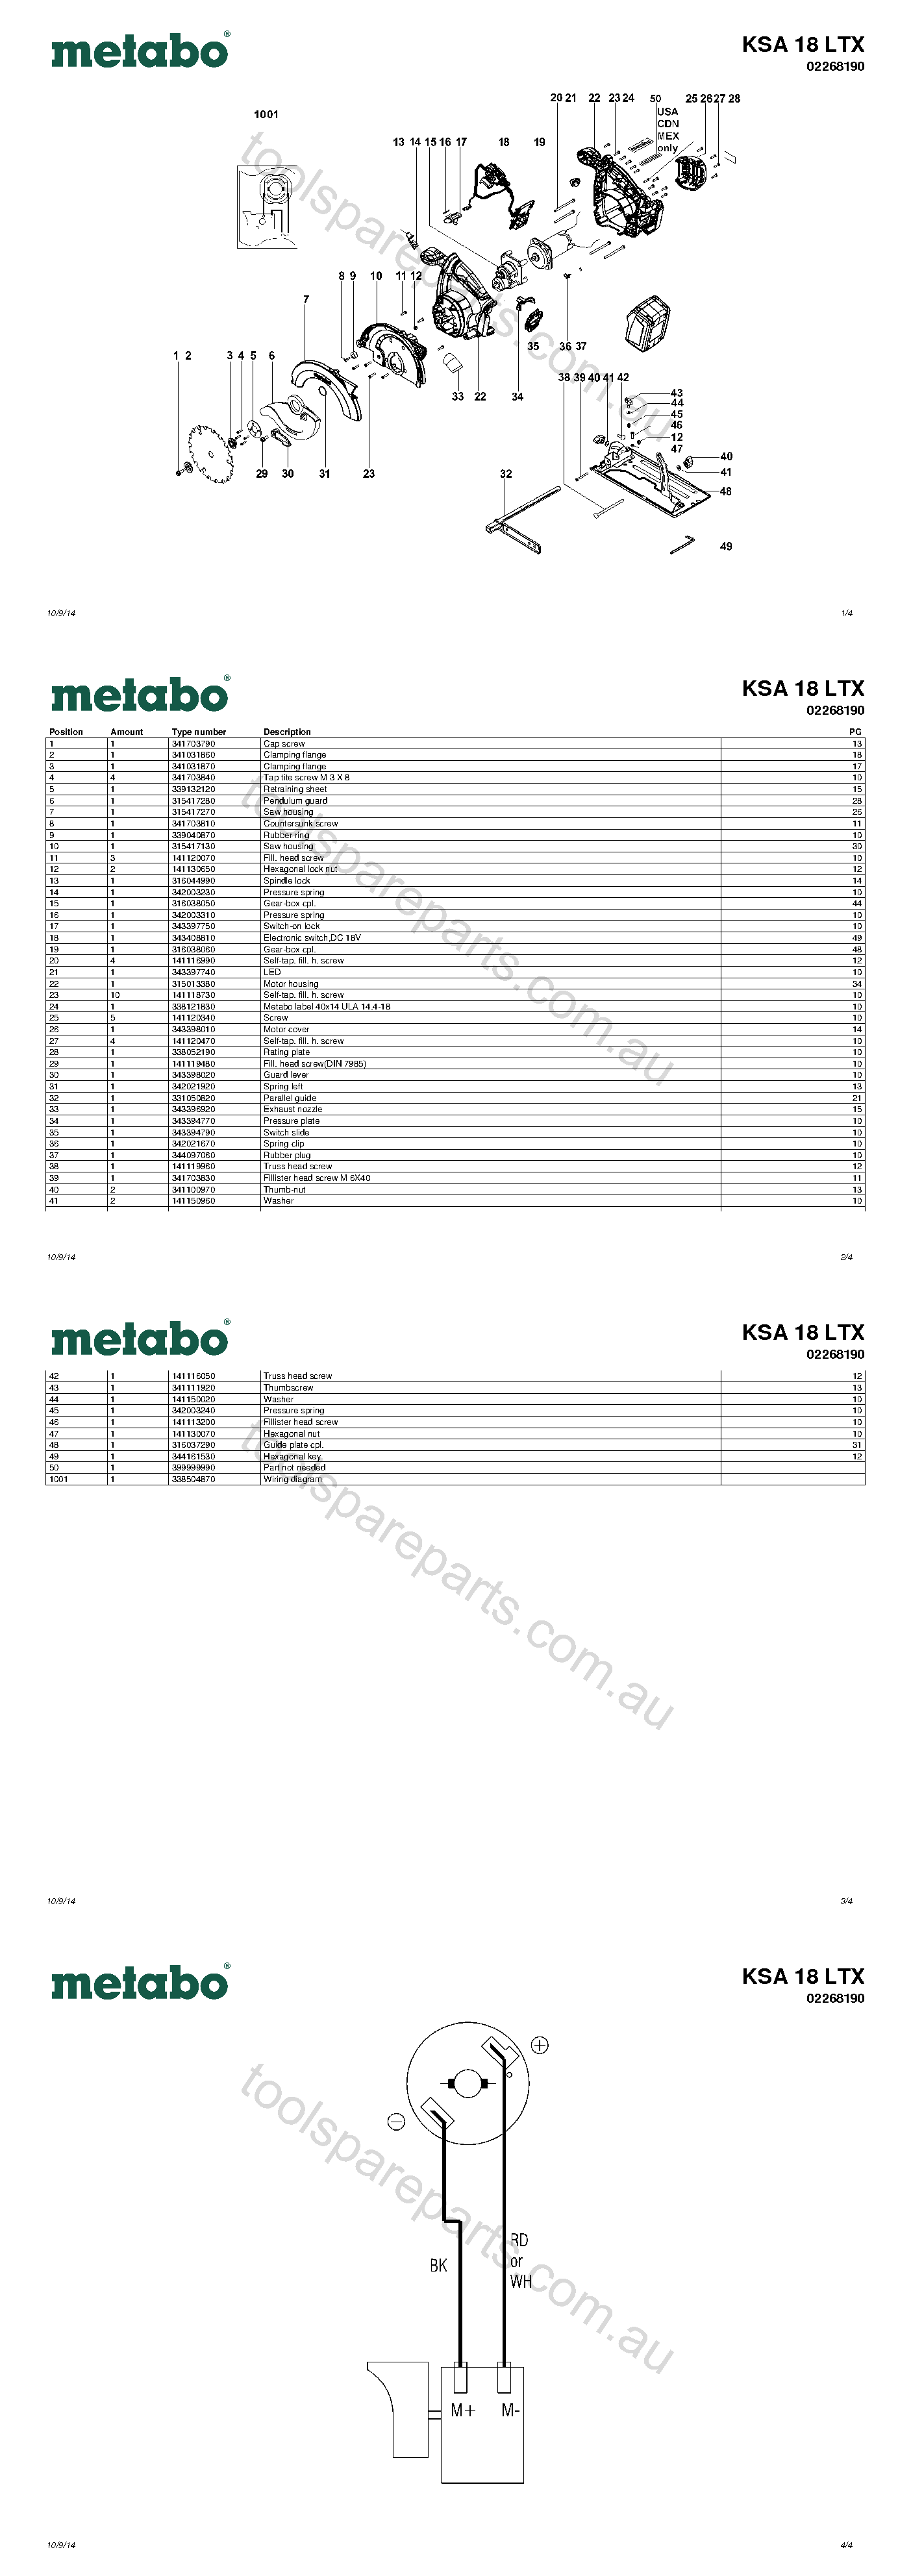 Metabo KSA 18 LTX 02268190  Diagram 1